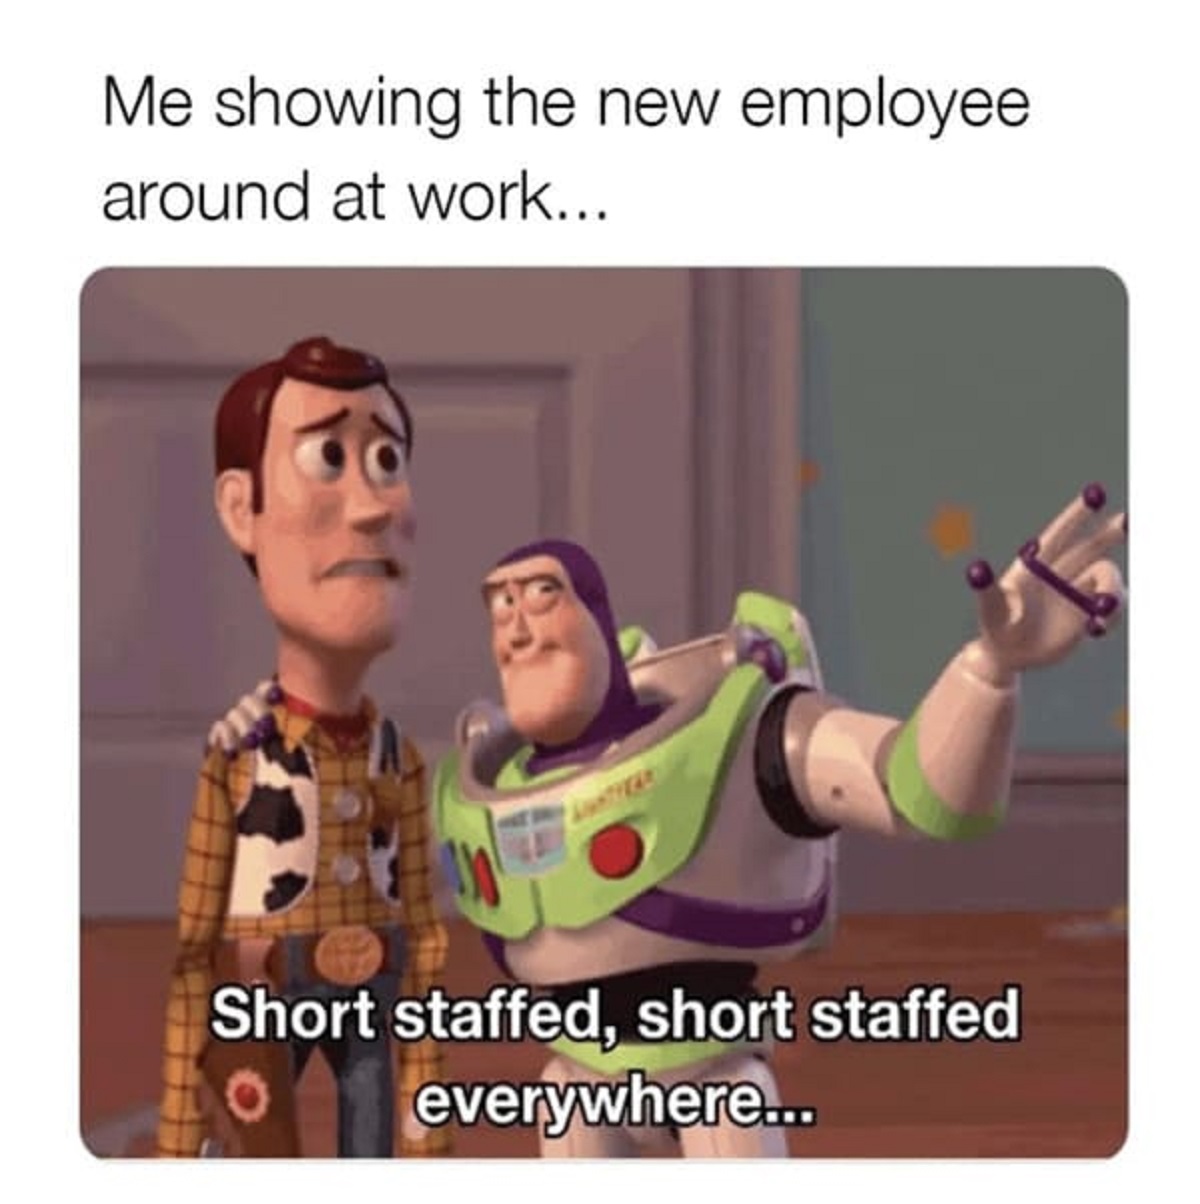 understaffed meme - Me showing the new employee around at work... Short staffed, short staffed everywhere...